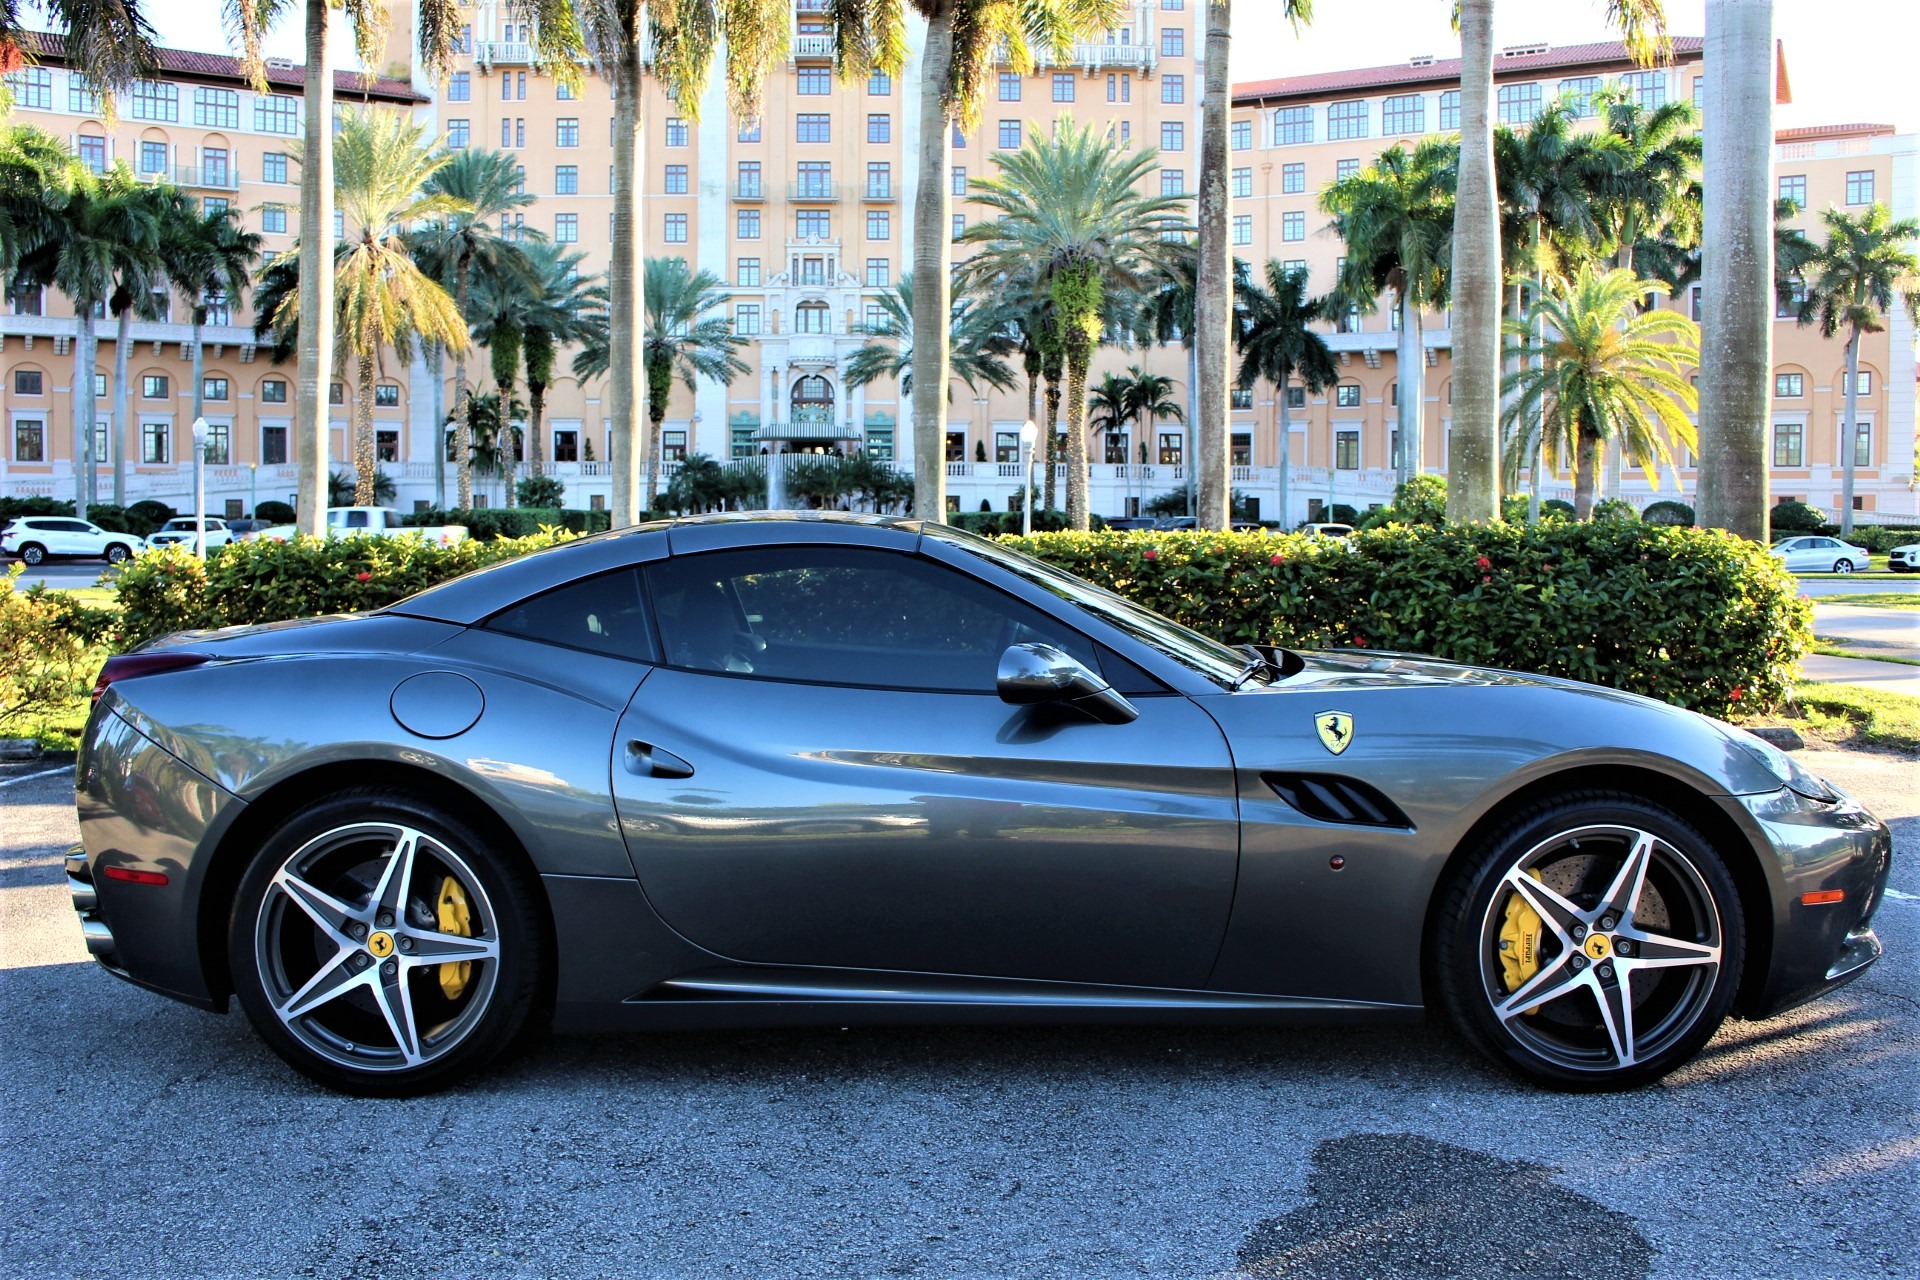 Used 2011 Ferrari California for sale $105,850 at The Gables Sports Cars in Miami FL 33146 2